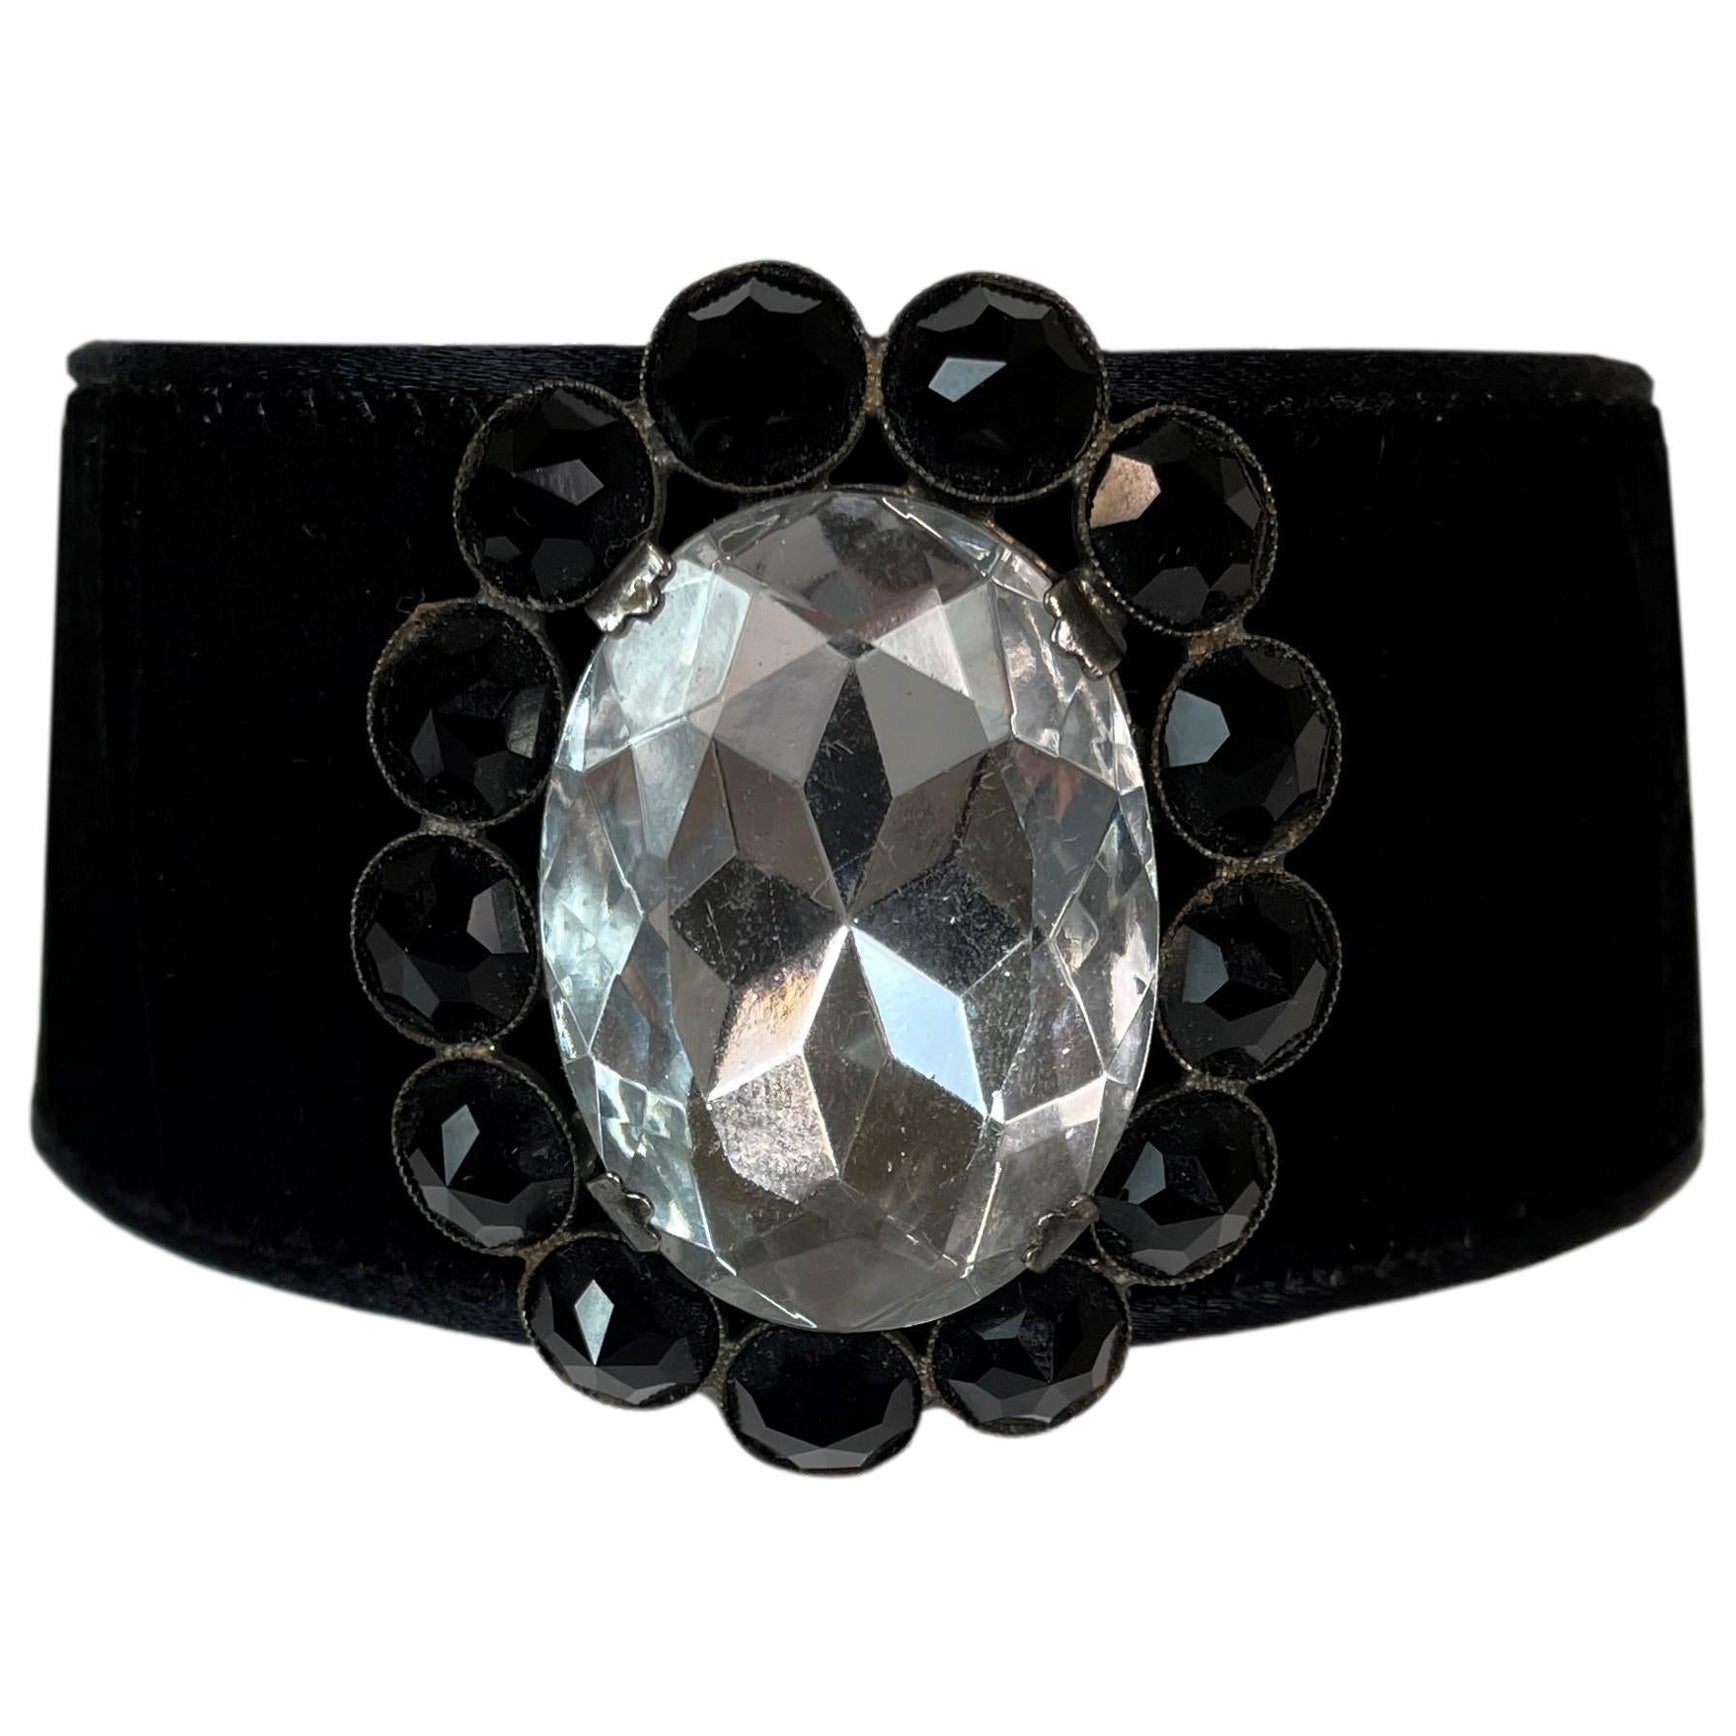 S/S 1993 Christian Dior Black Velvet Goth Princess Crystal Choker Necklace